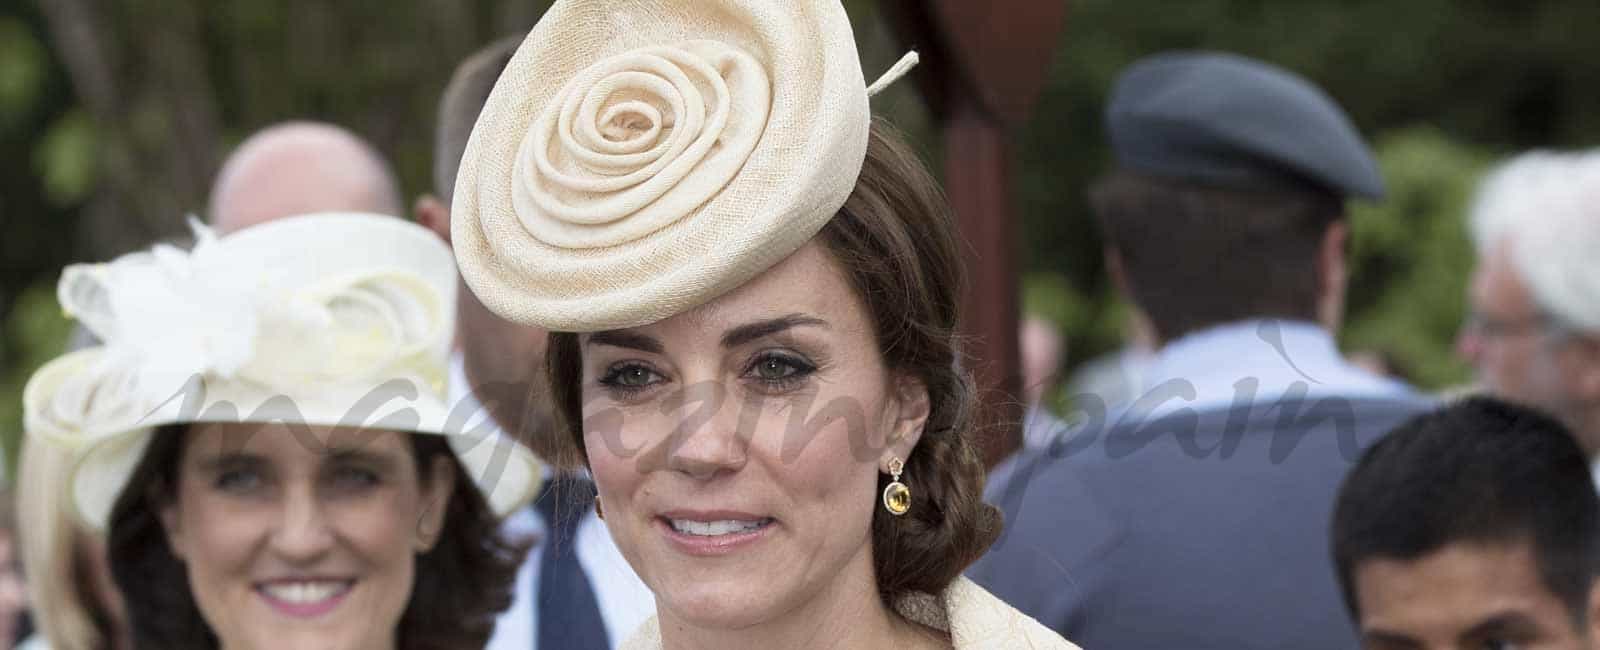 Kate Middleton “recicla” un traje de hace diez años